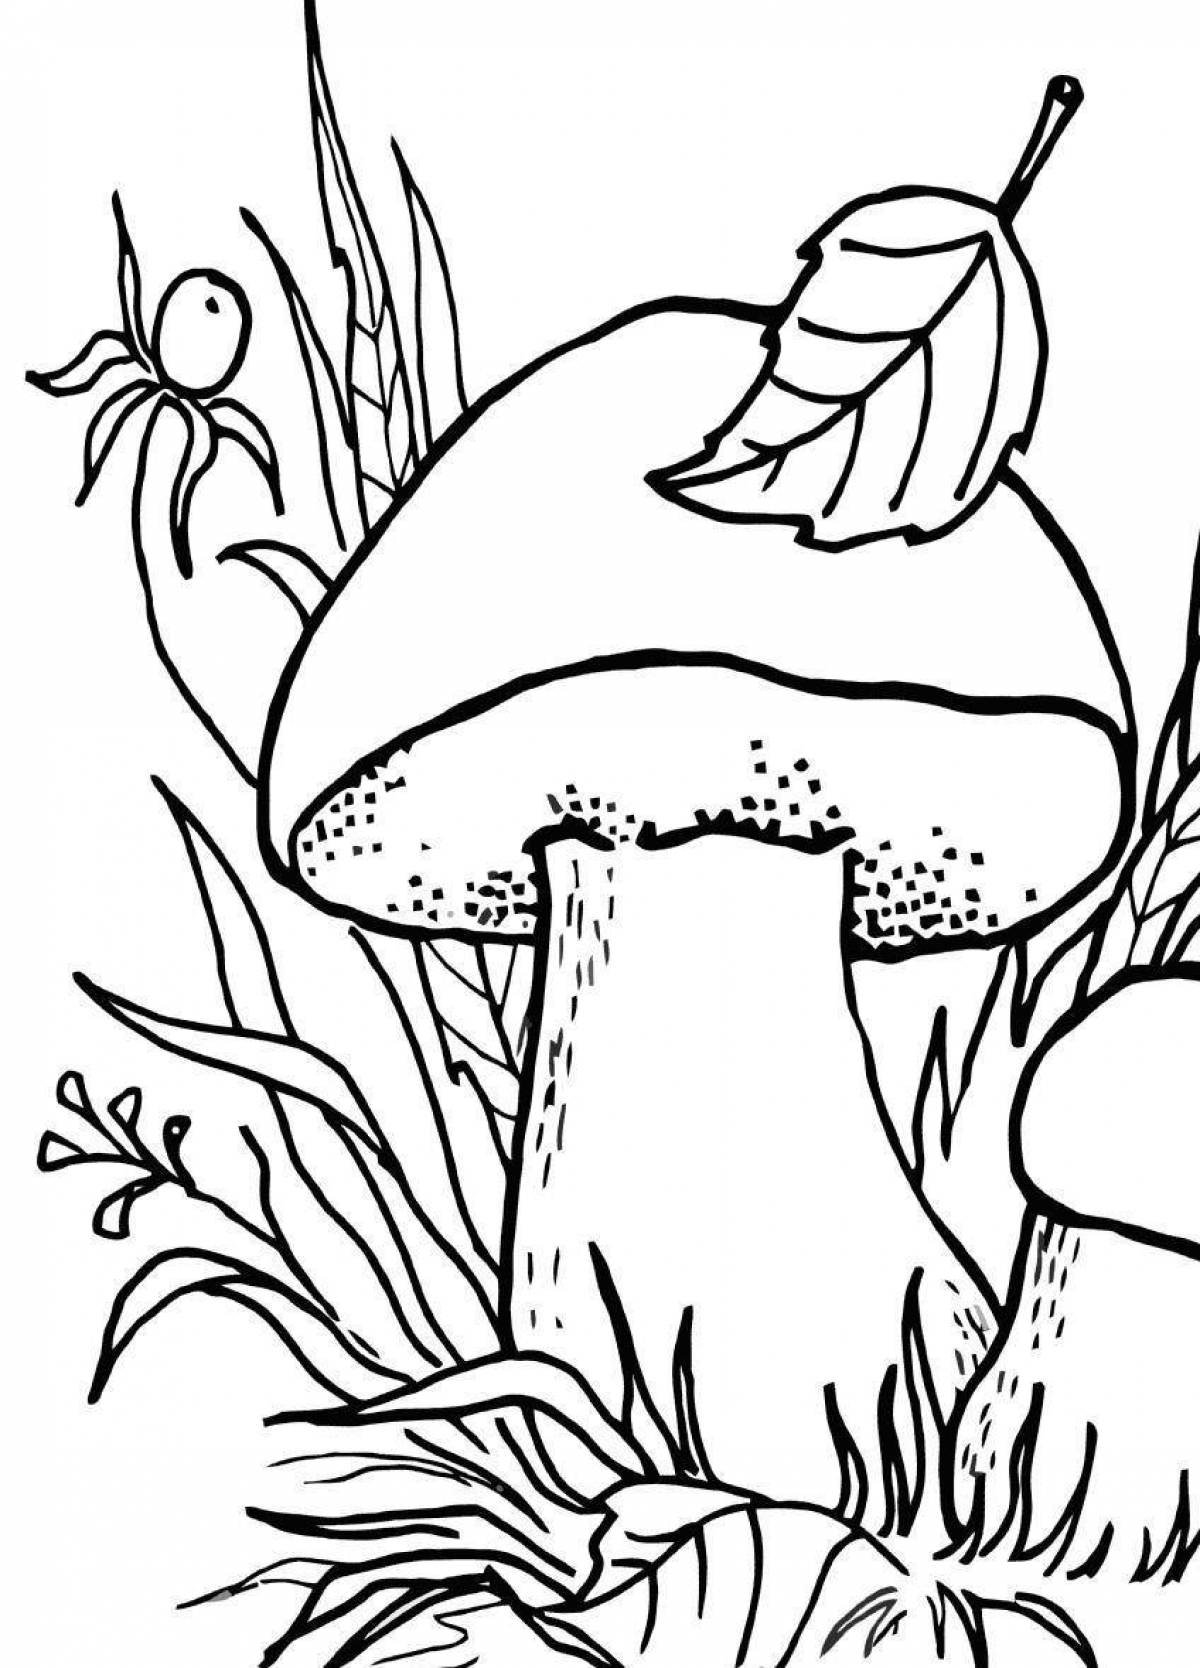 Attractive coloring of boletus mushrooms